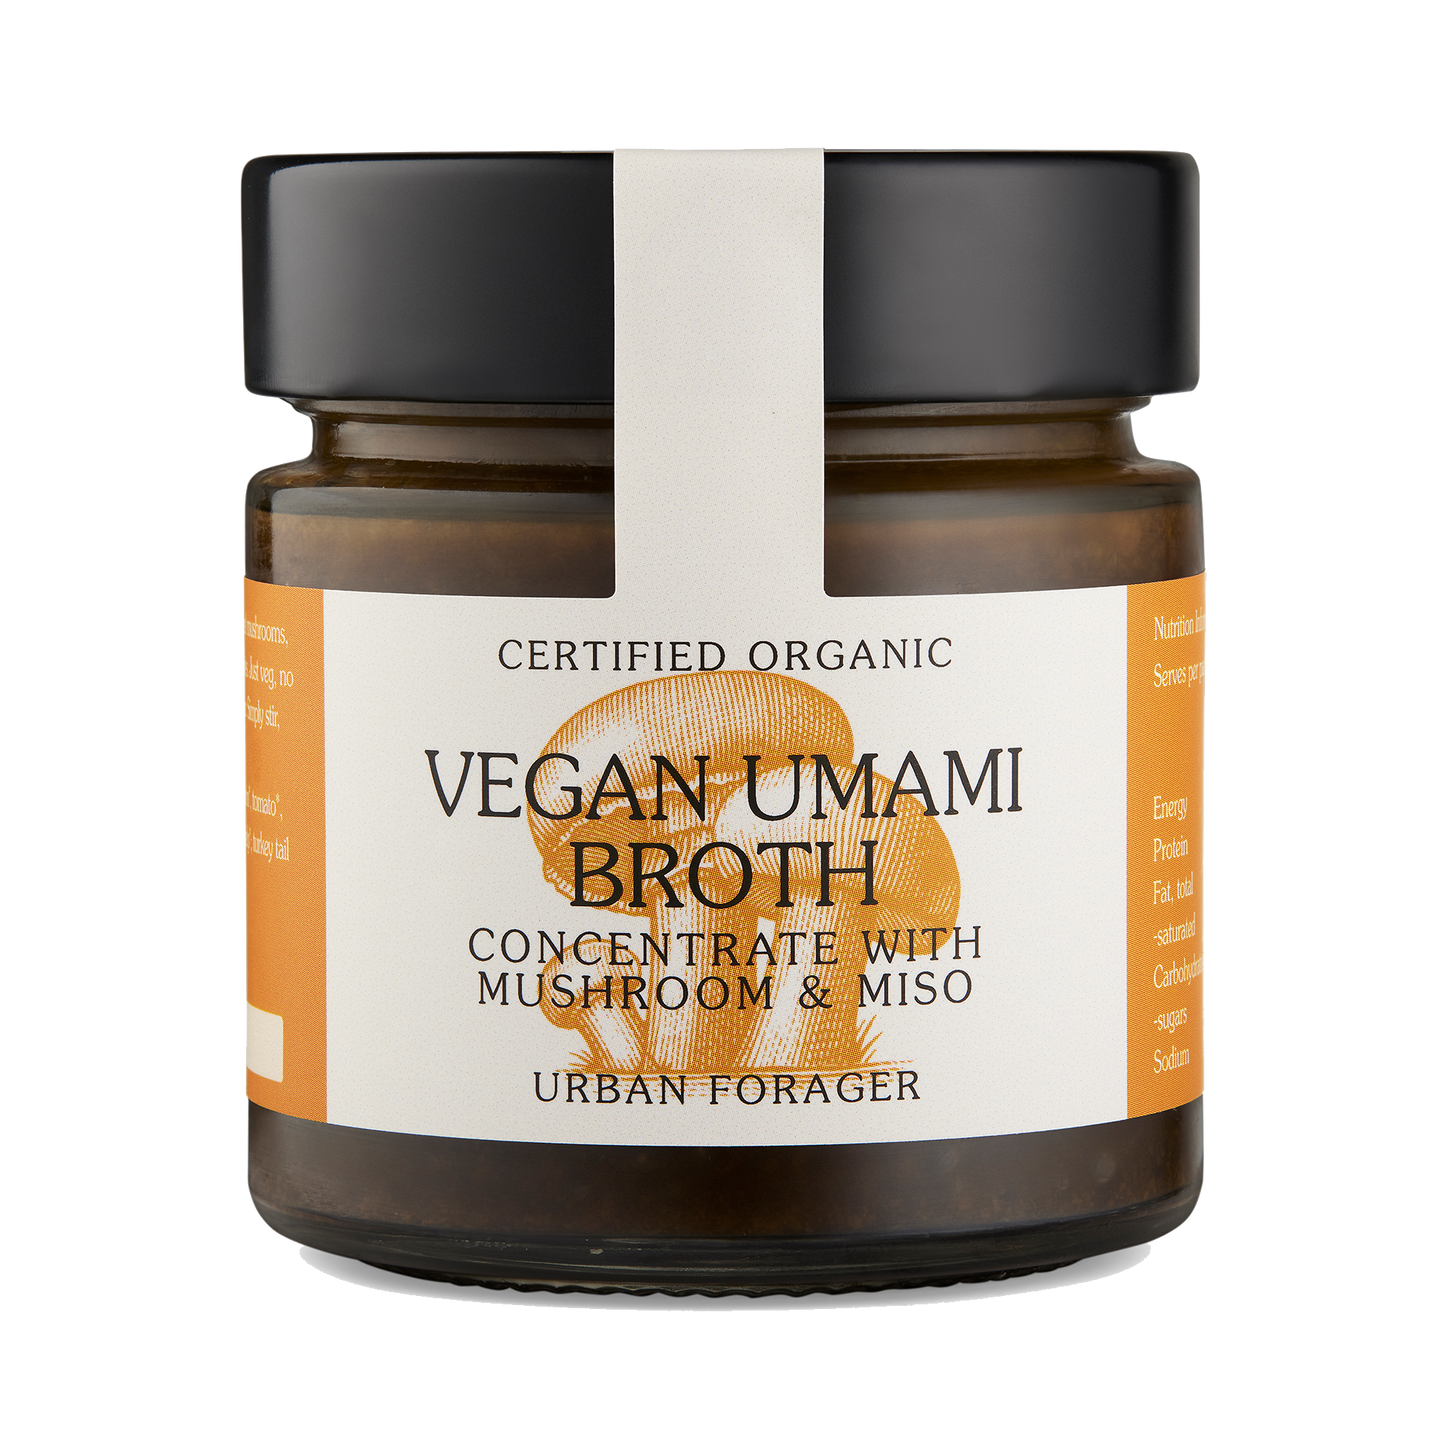 Urban Forager Vegan Umami Broth Concentrate 250g, Australian & Certified Organic With Mushroom & Miso